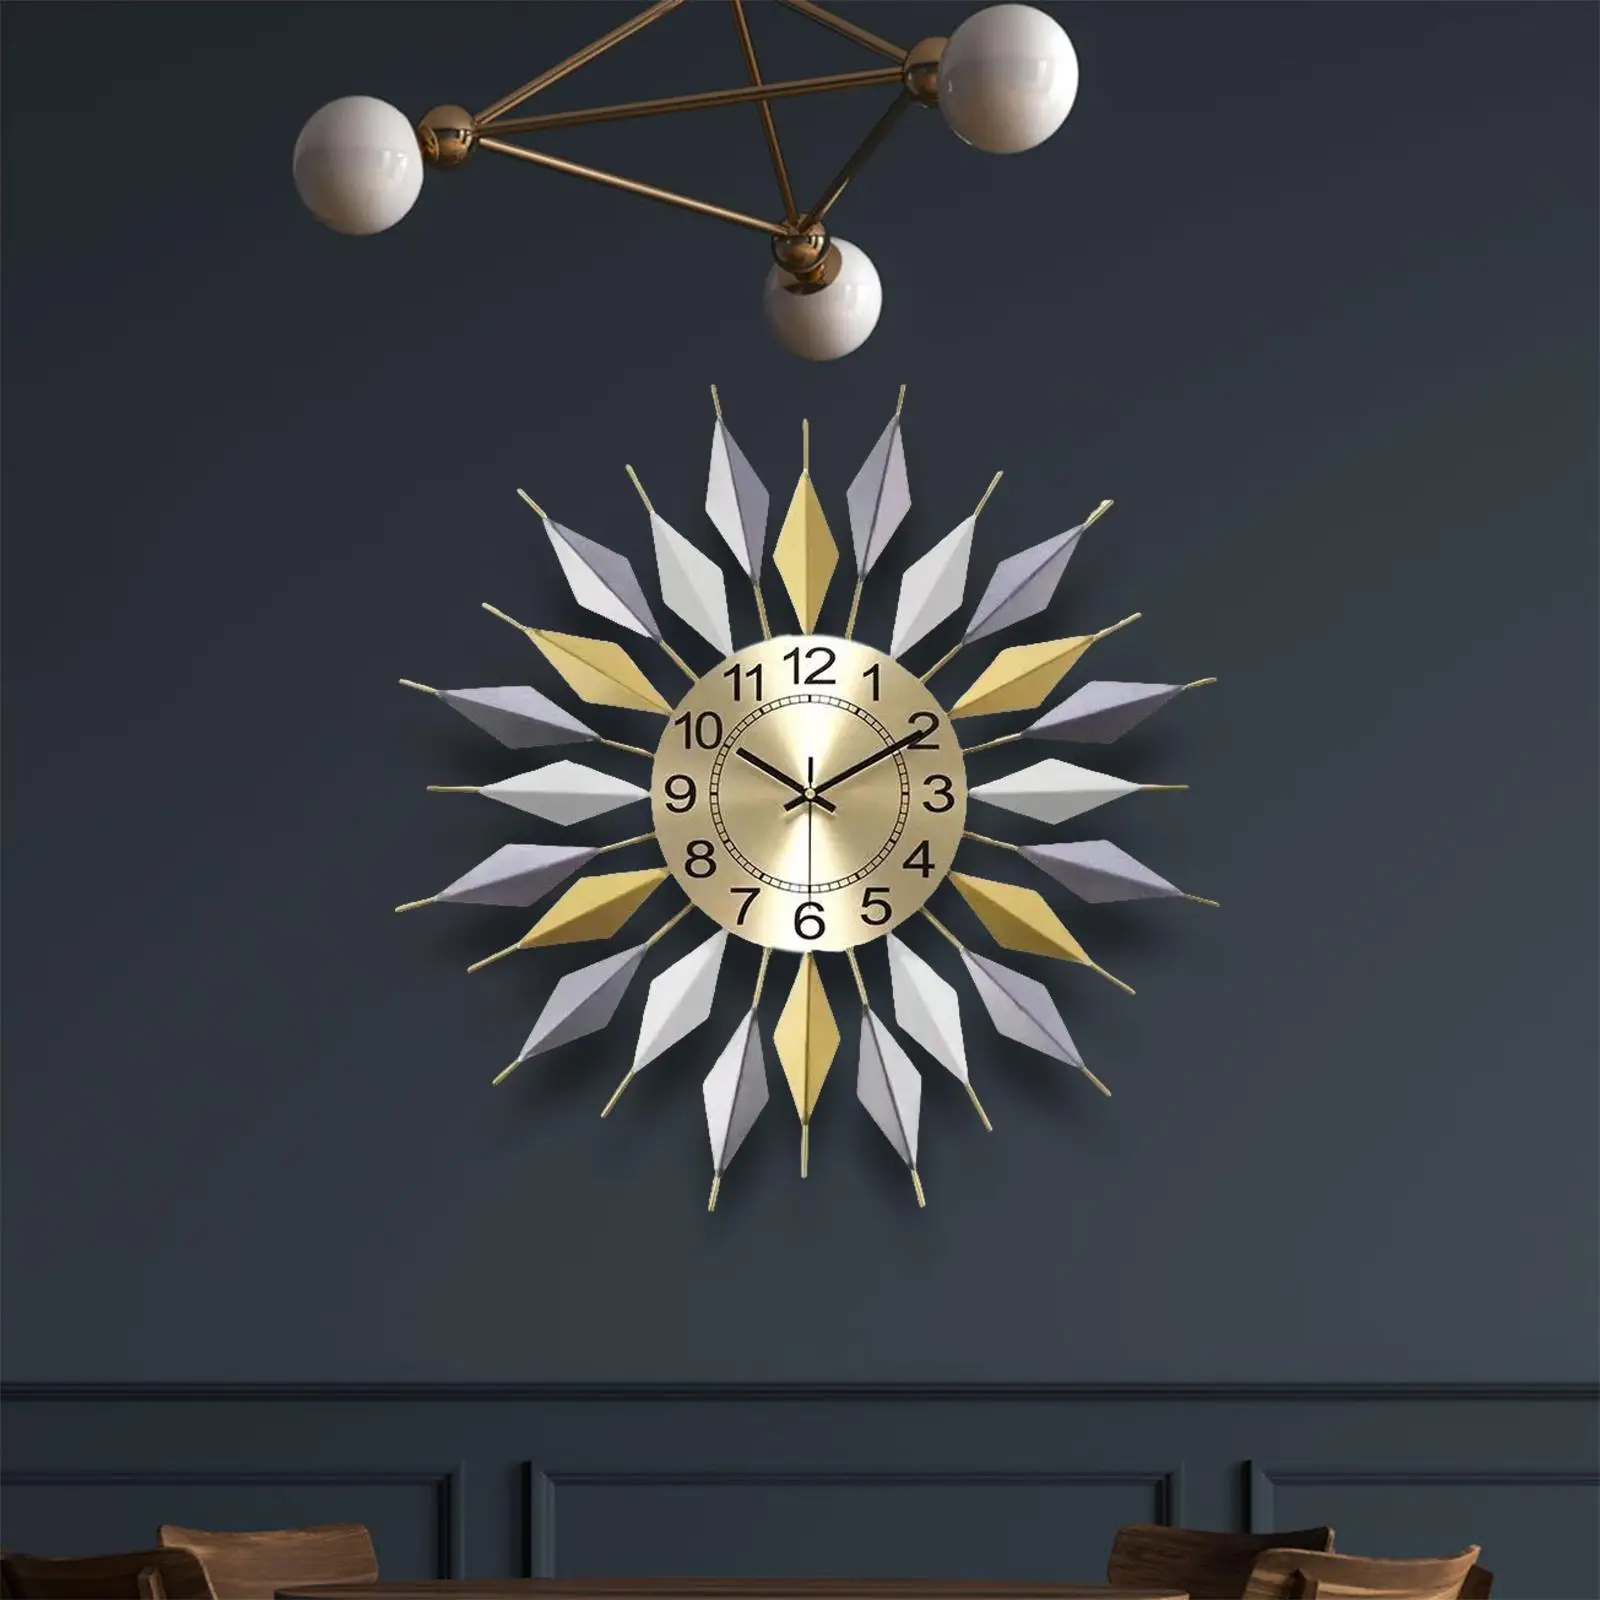 Large Wall Clock Decorative Clocks Circular Hanging Clocks for Dining Room Decor